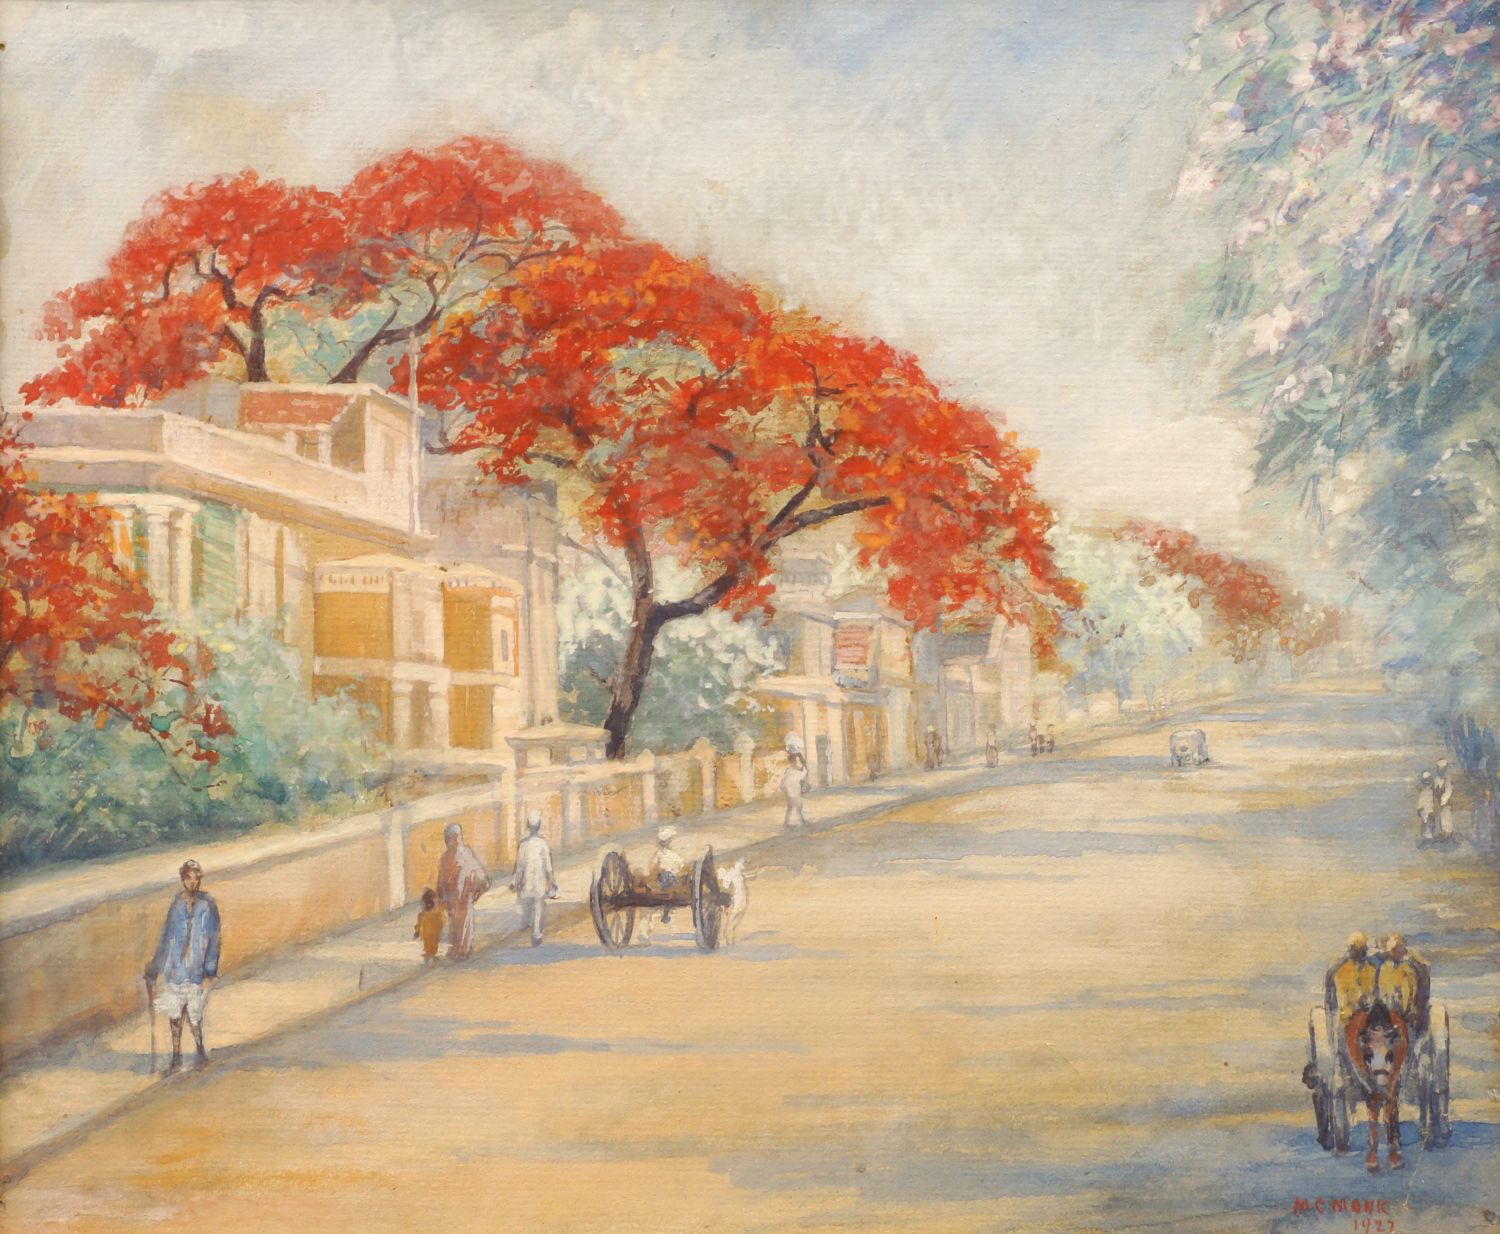 M C Monk, British, 20th century- ''Wood St. Calcutta''; watercolour, 25x30cm: R Gibb, British, early